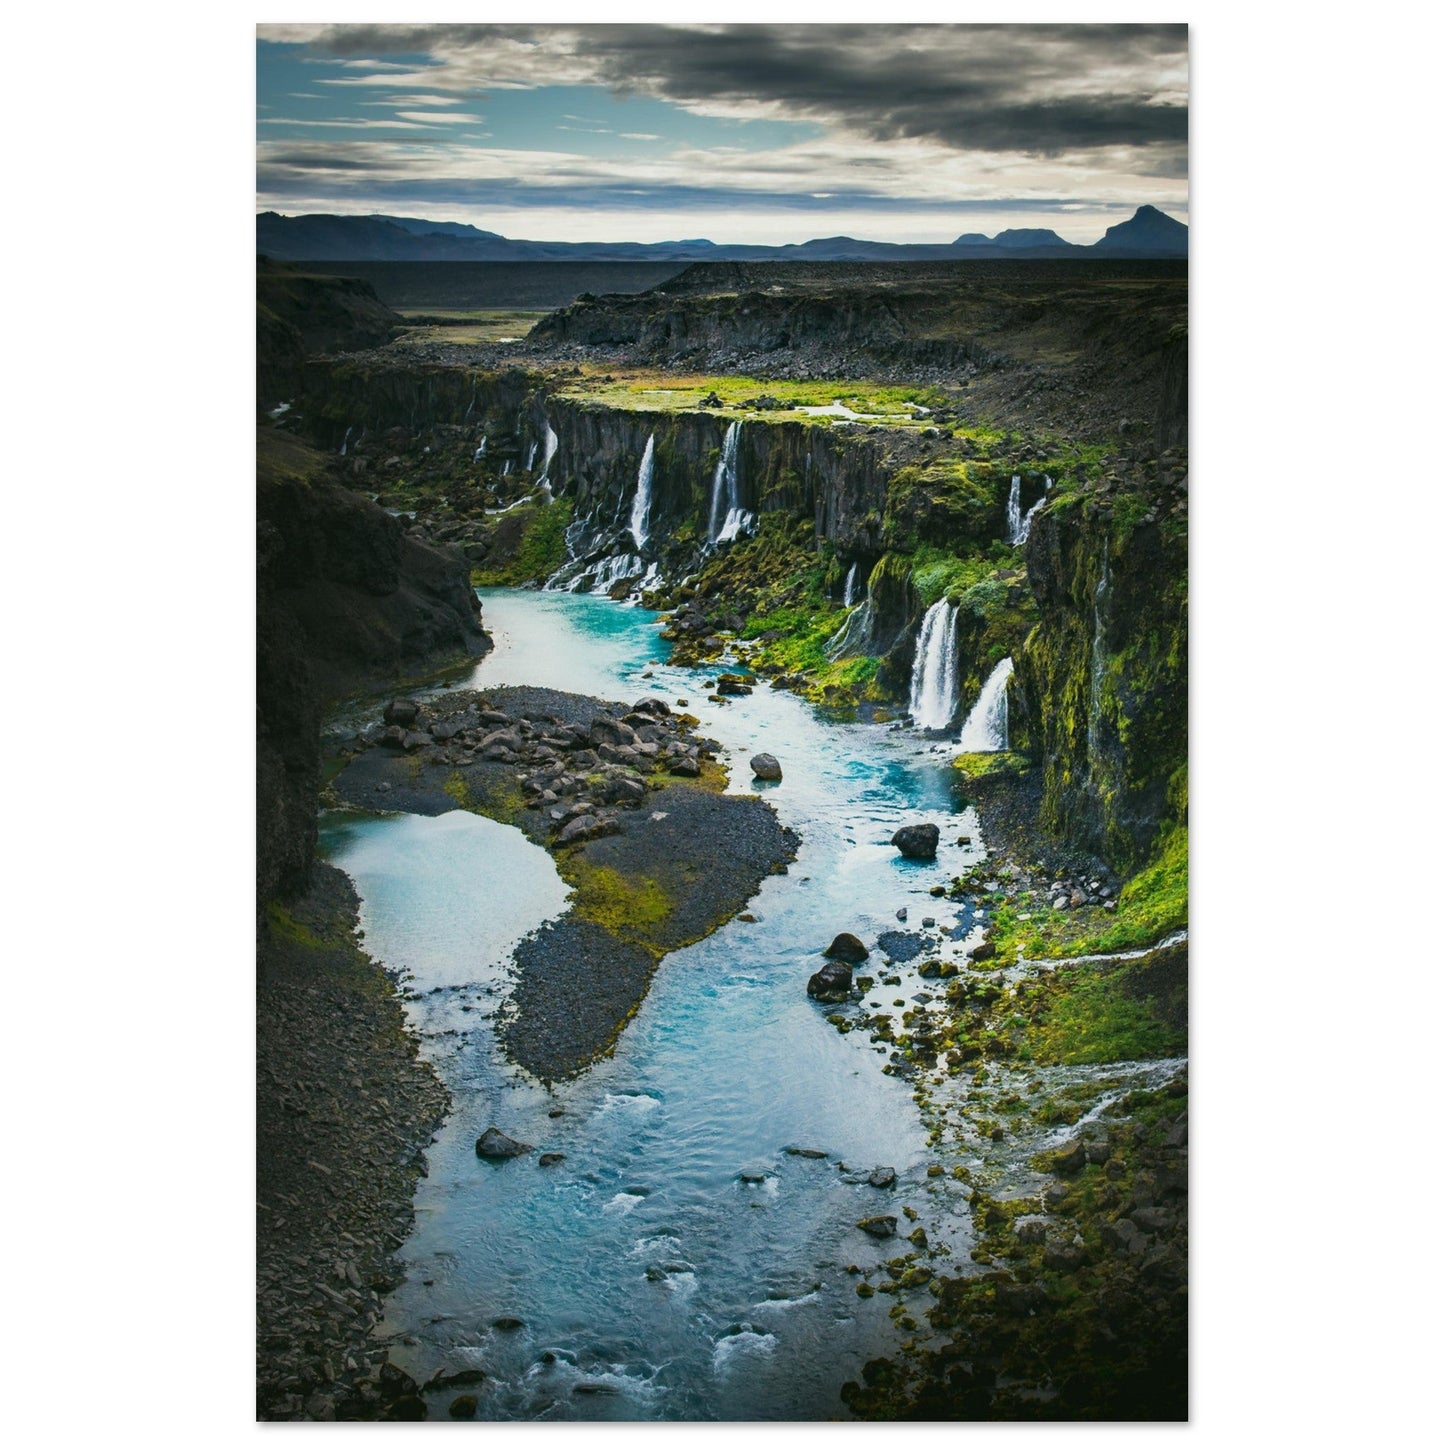 Photo de cascades en Islande - Tableau photo alu montagne